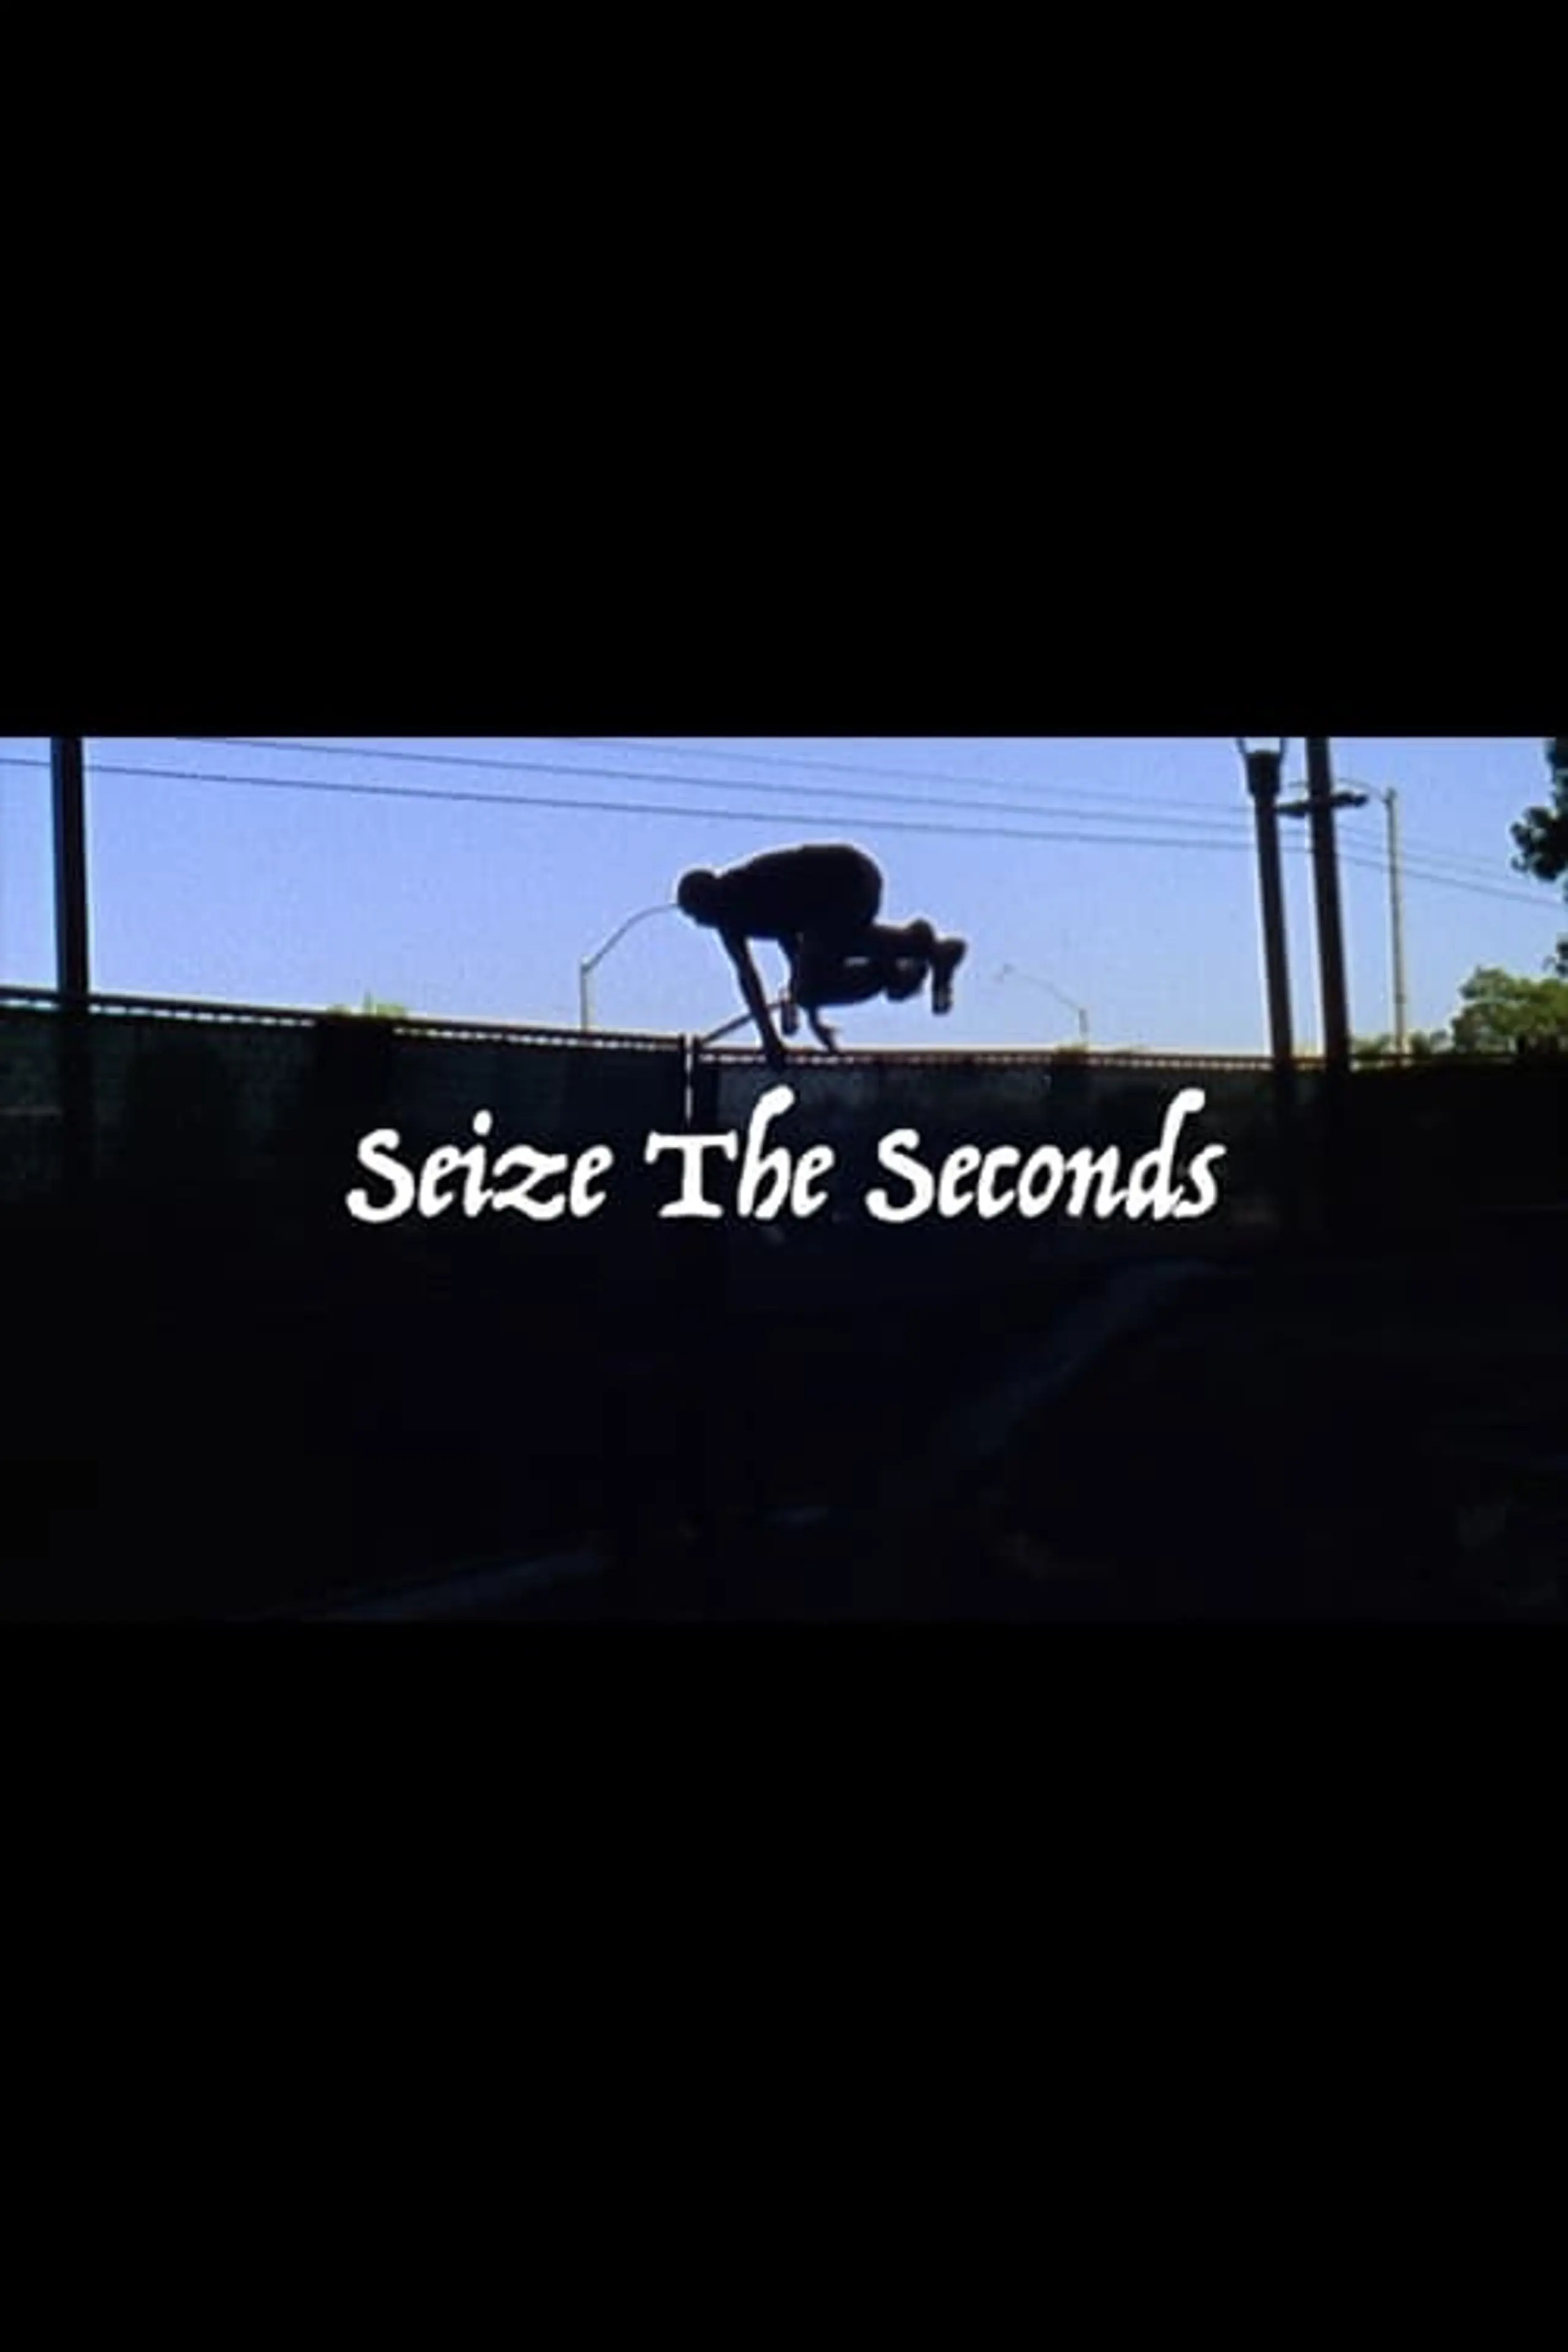 Seize the Seconds